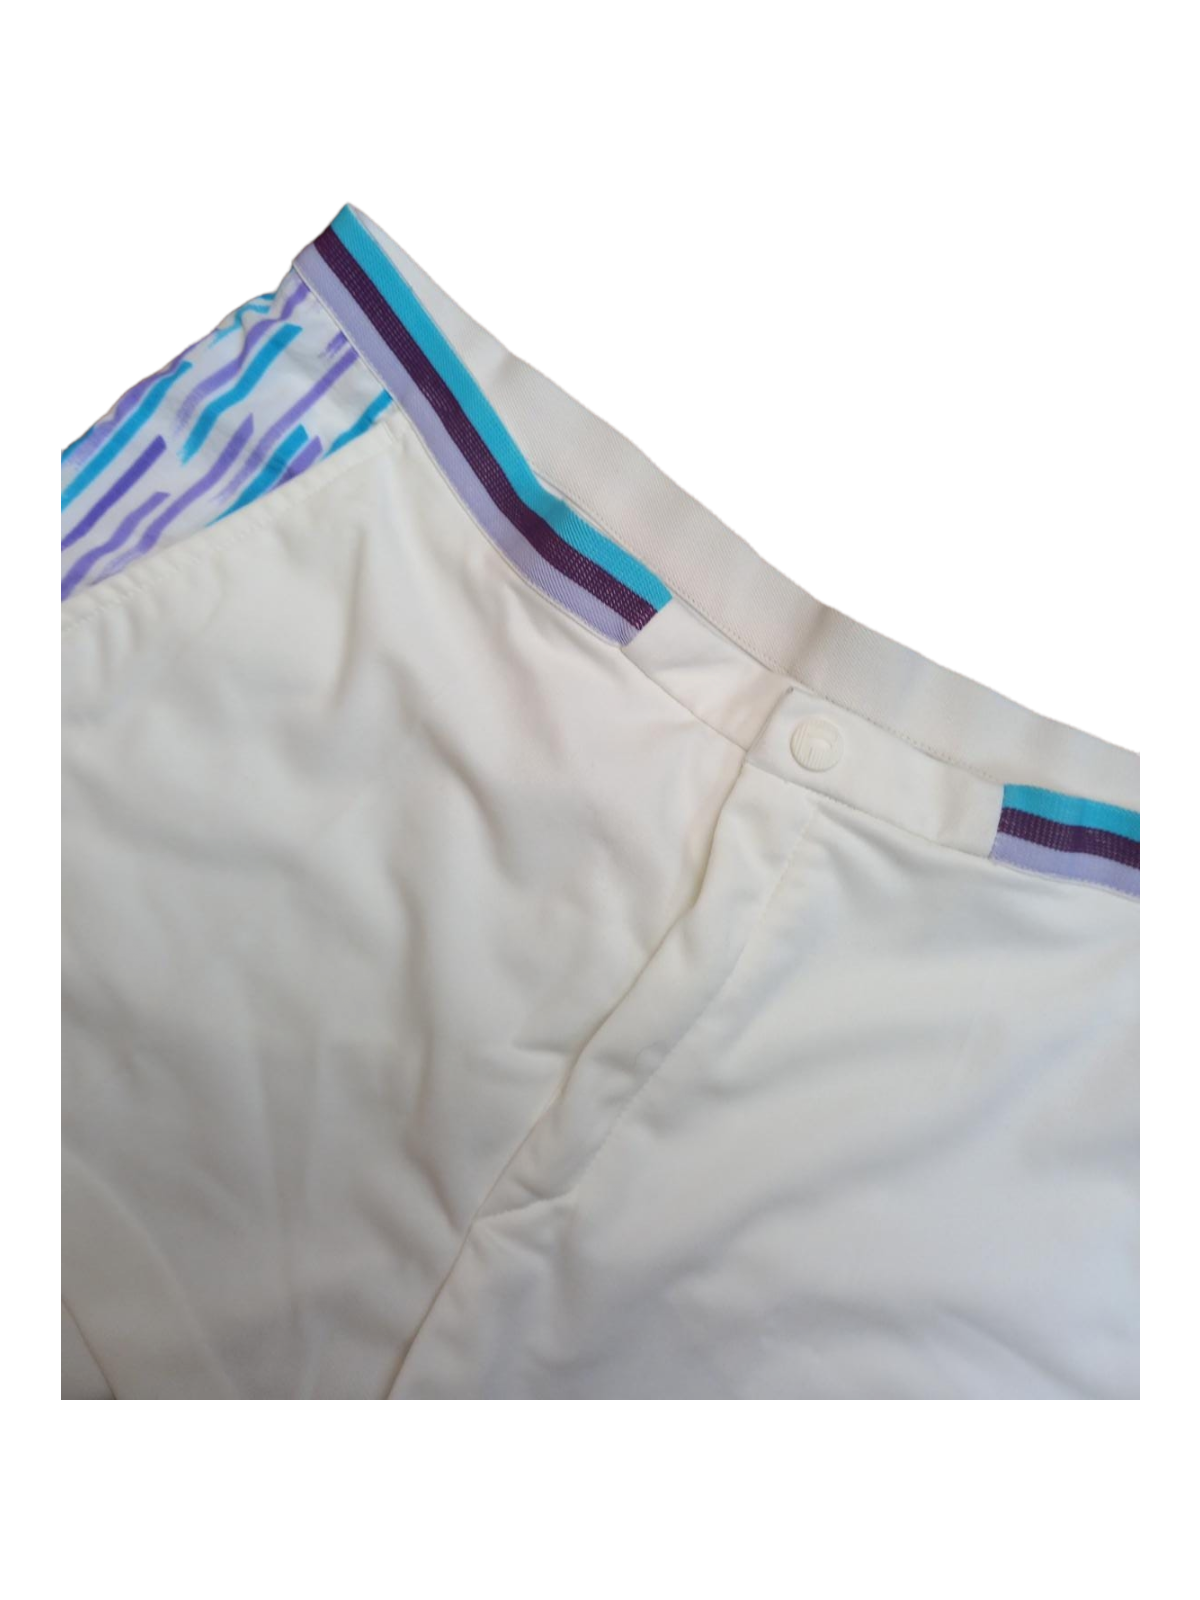 Vintage 80s Fila tennis shorts - XL